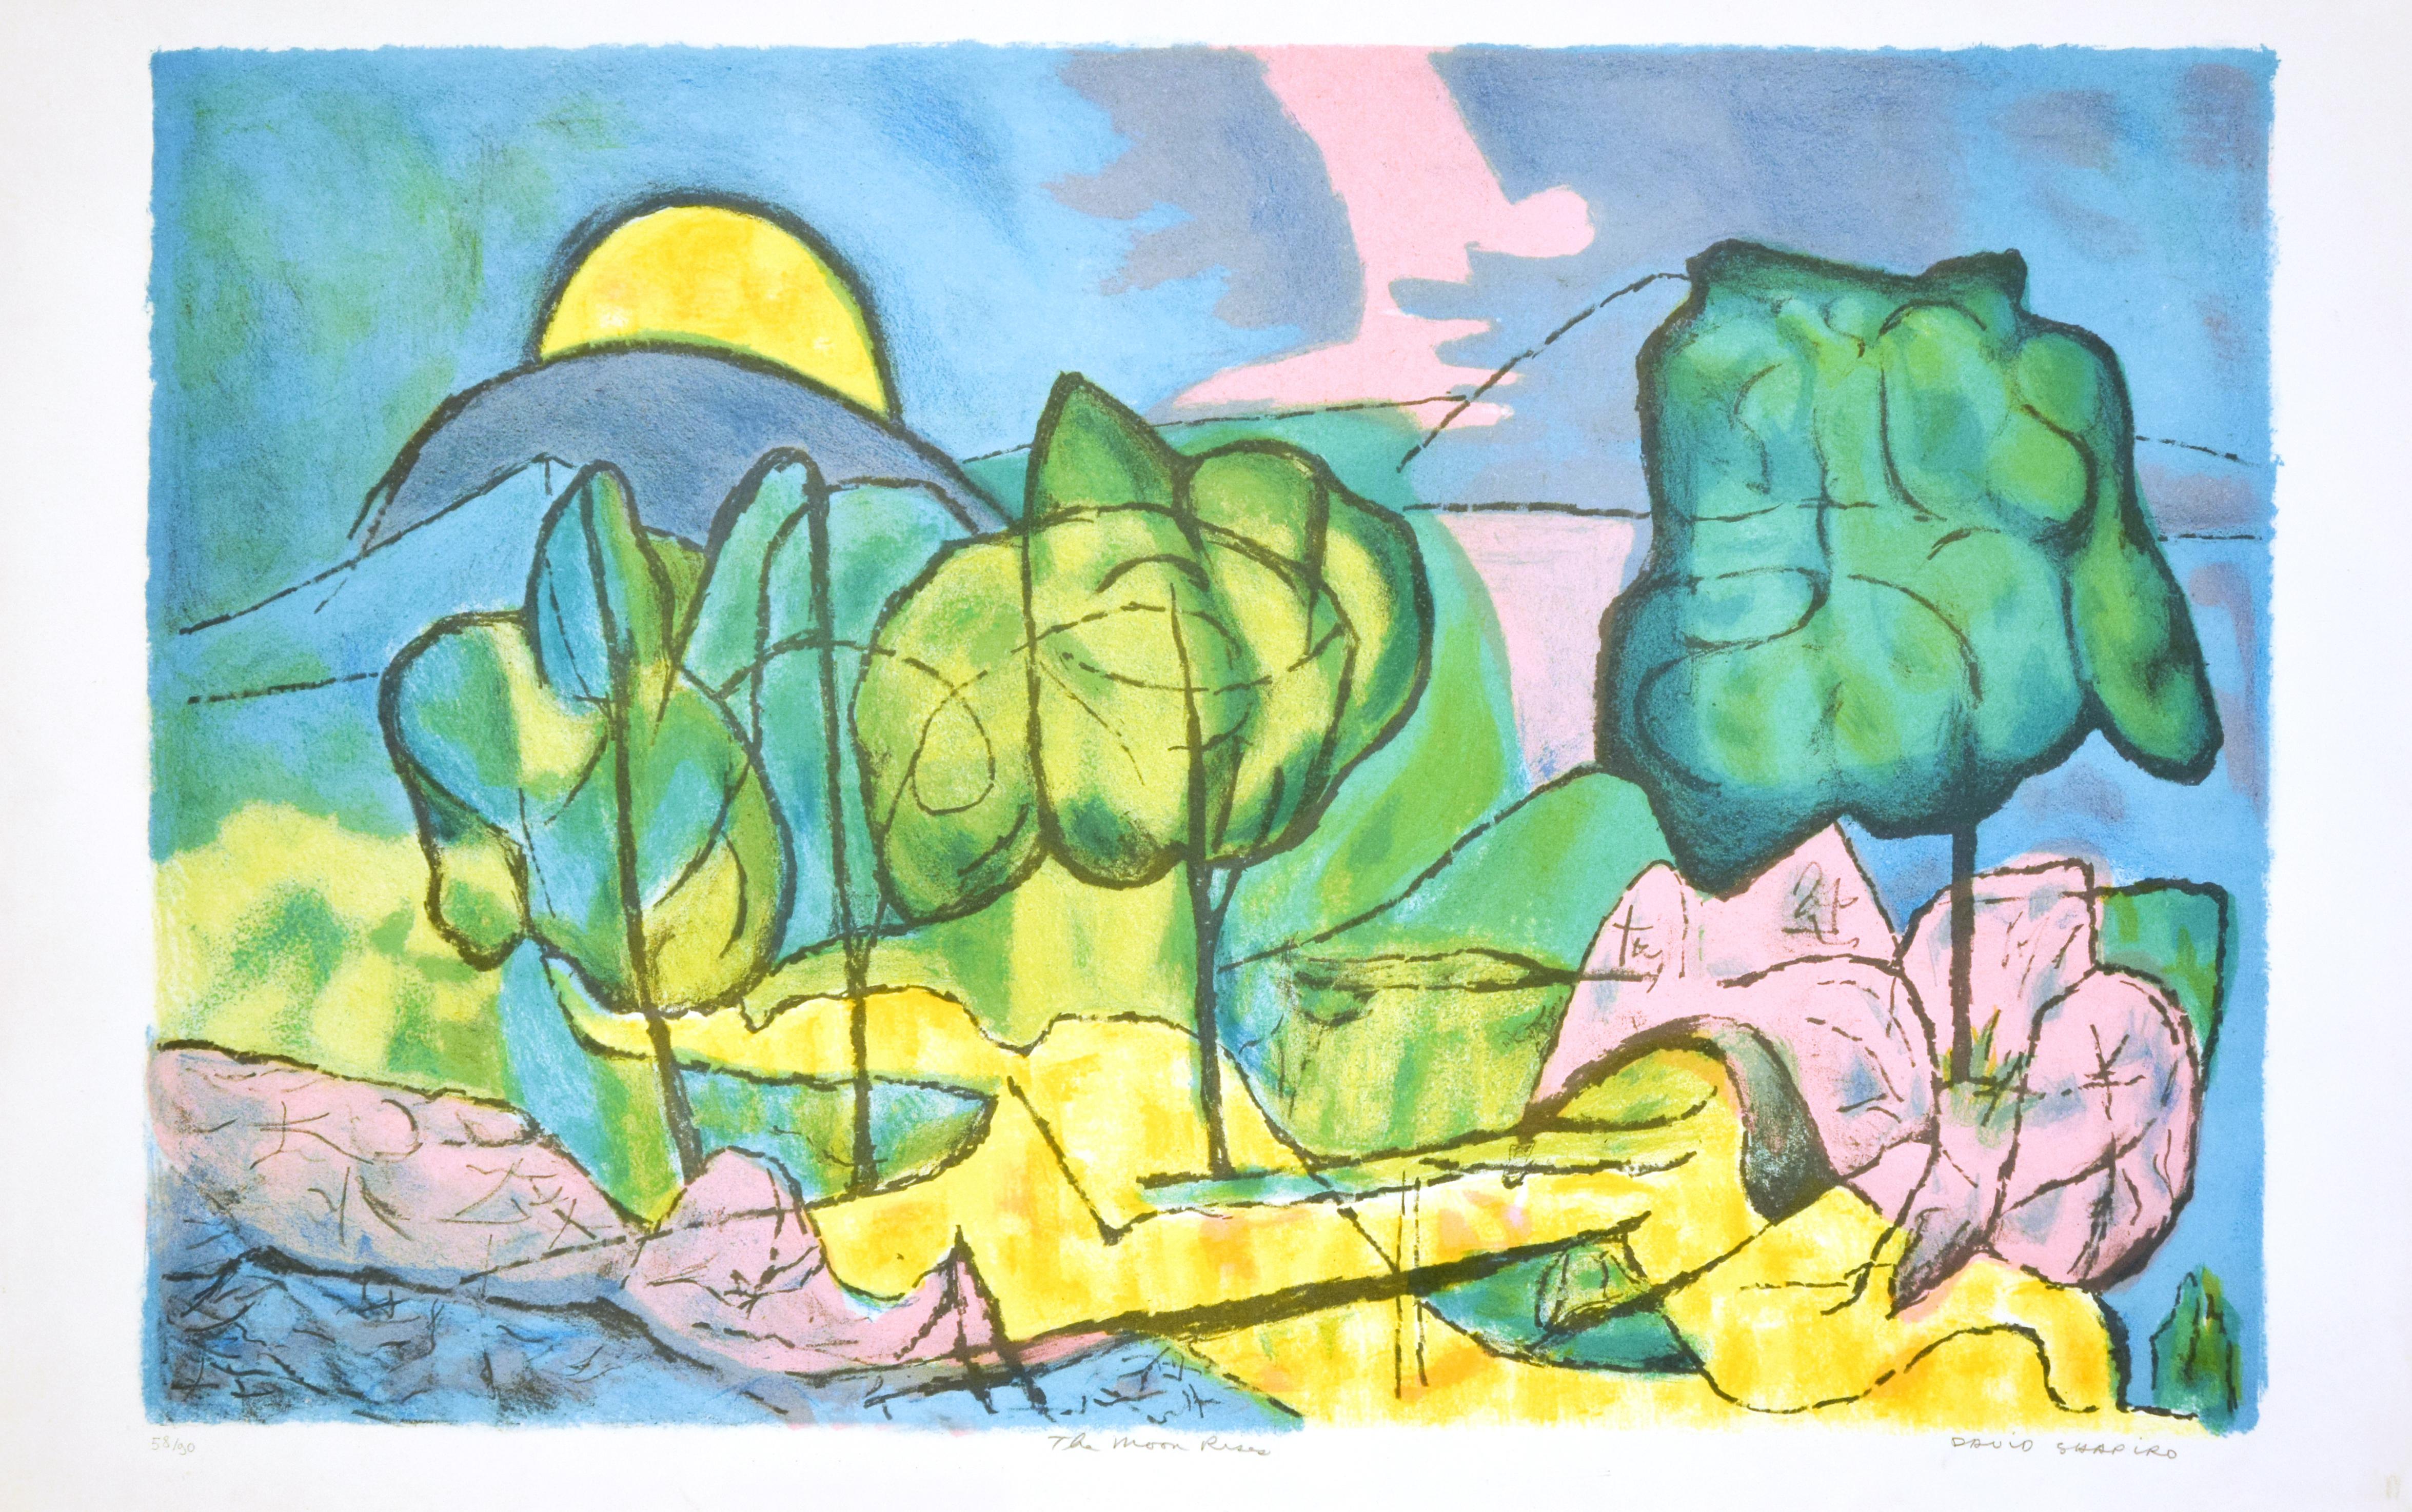 Colorful Landscape - Lithograph by David Shapiro - 1980s